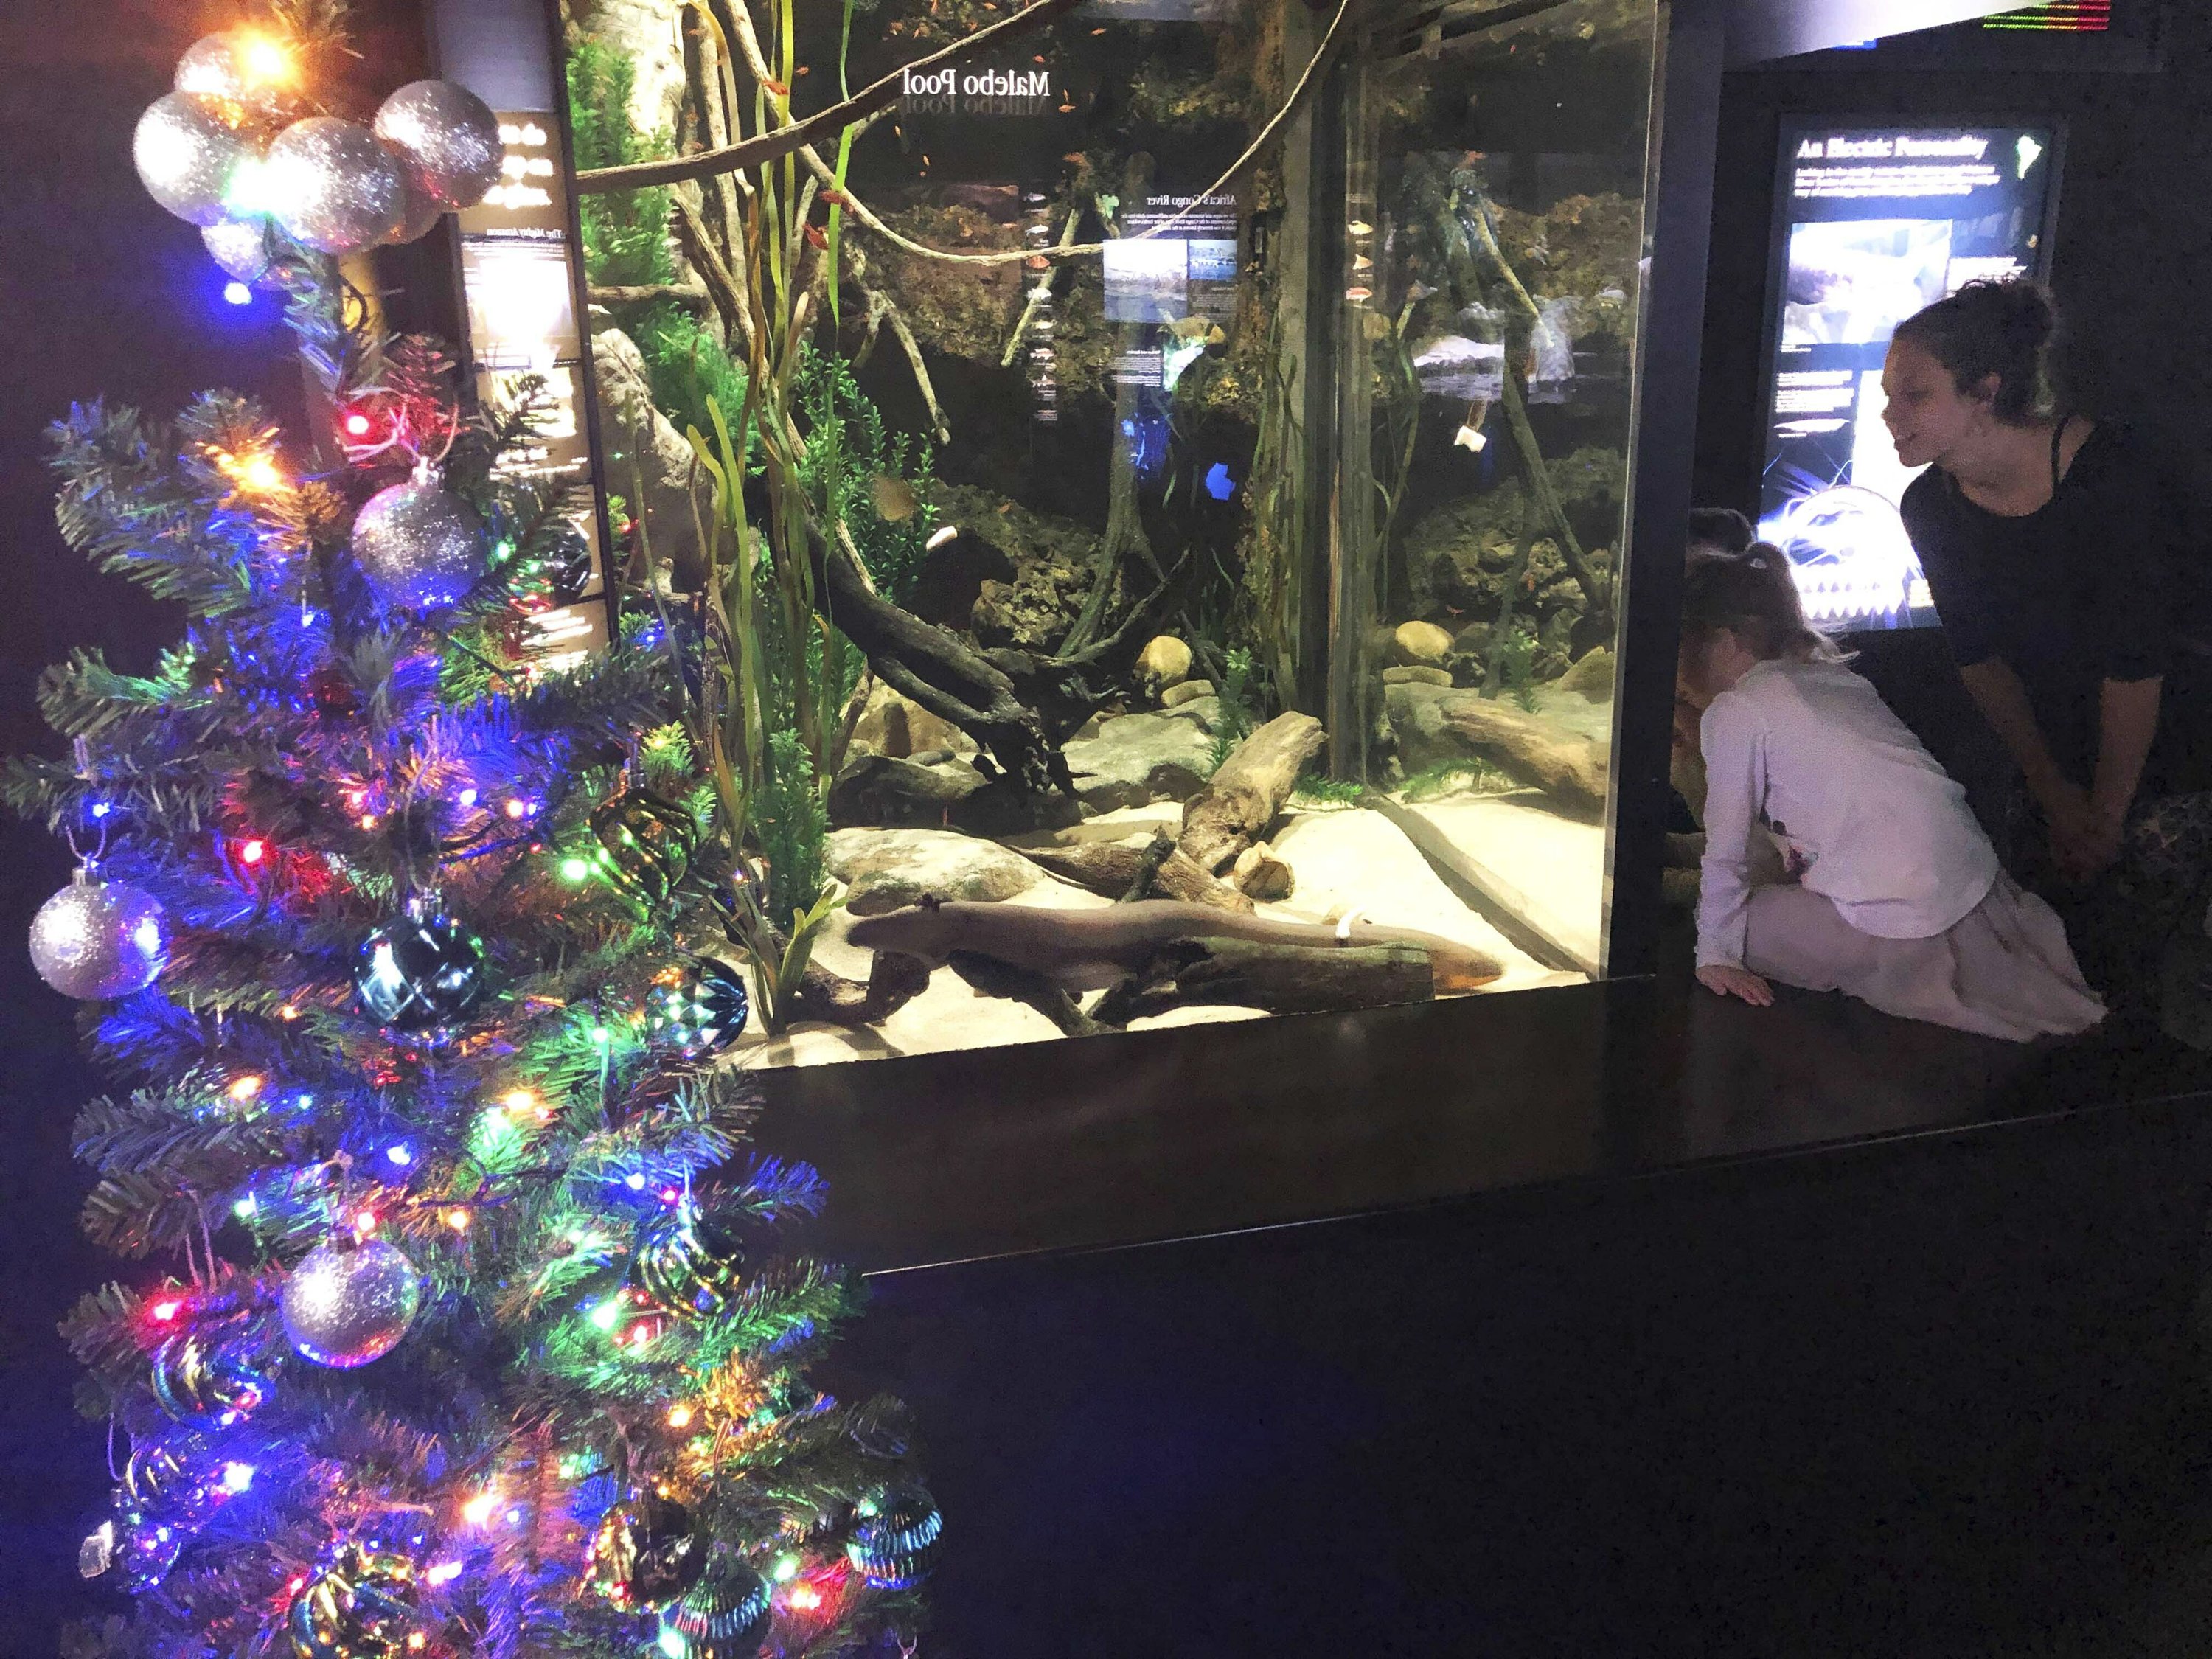 Shocked? Electric eel powers aquarium's Christmas lights